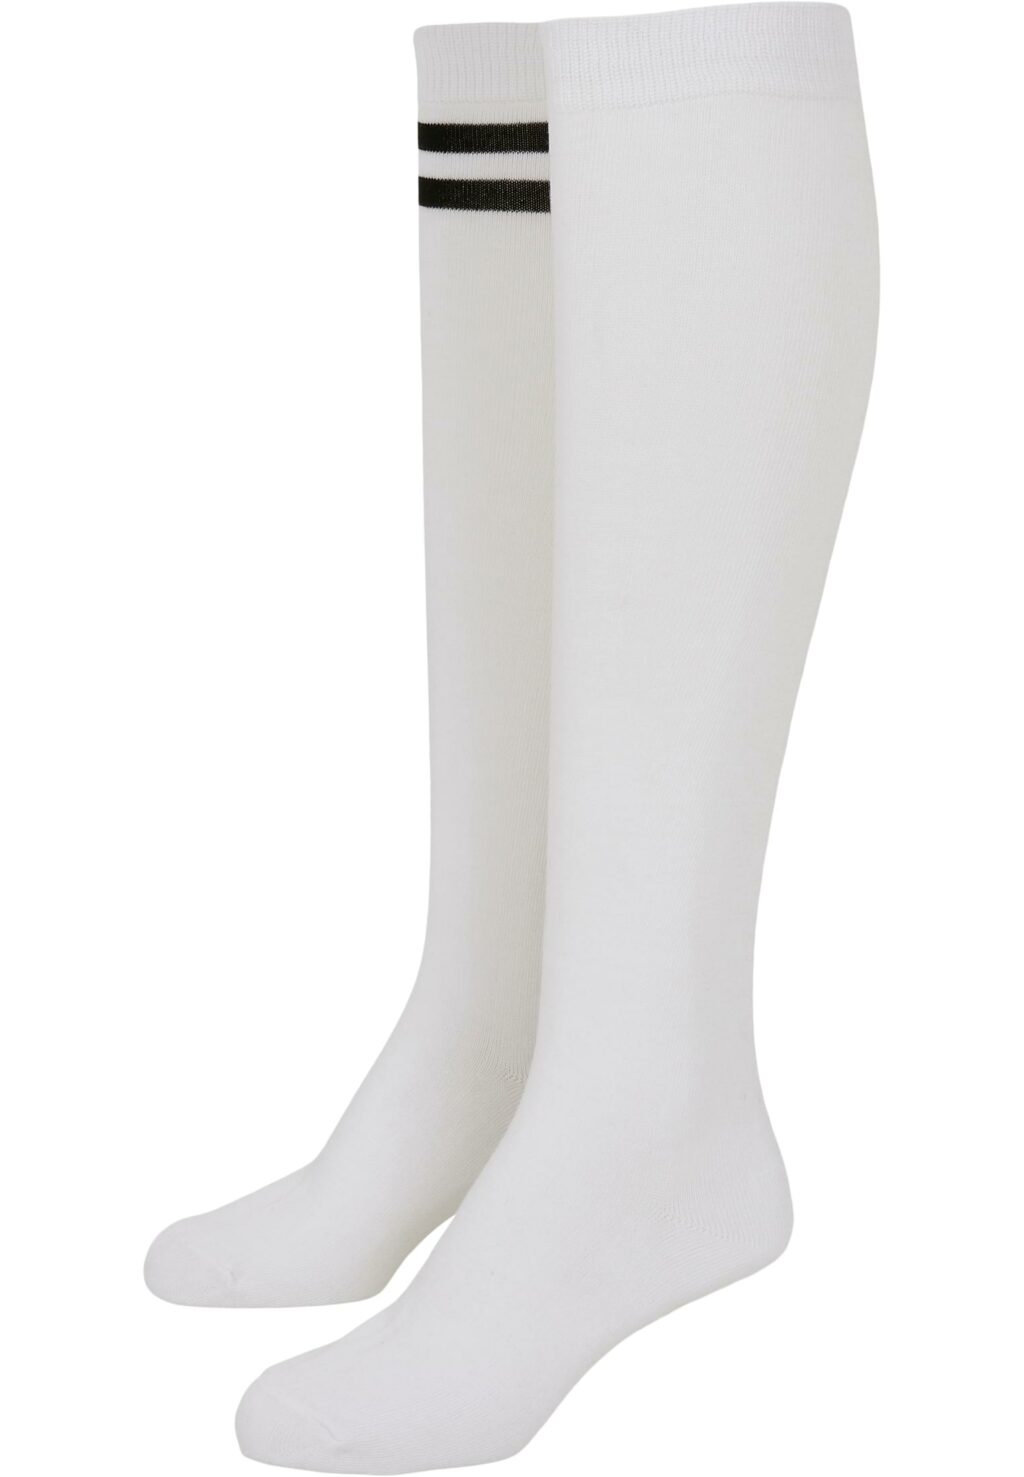 Ladies College Socks 2-Pack white TB4641